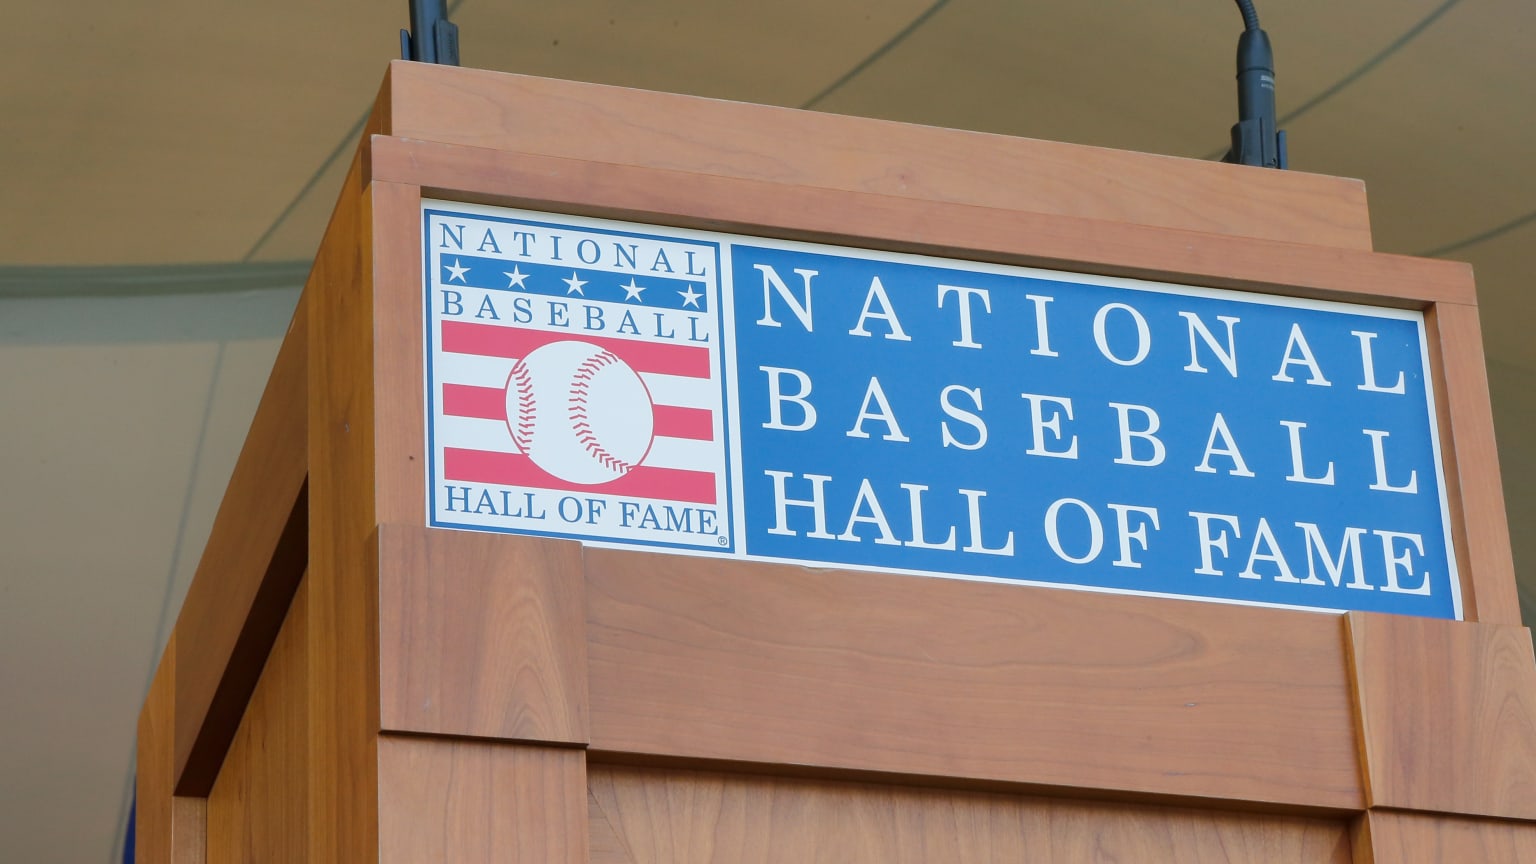 A podium with the National Baseball Hall of Fame logo